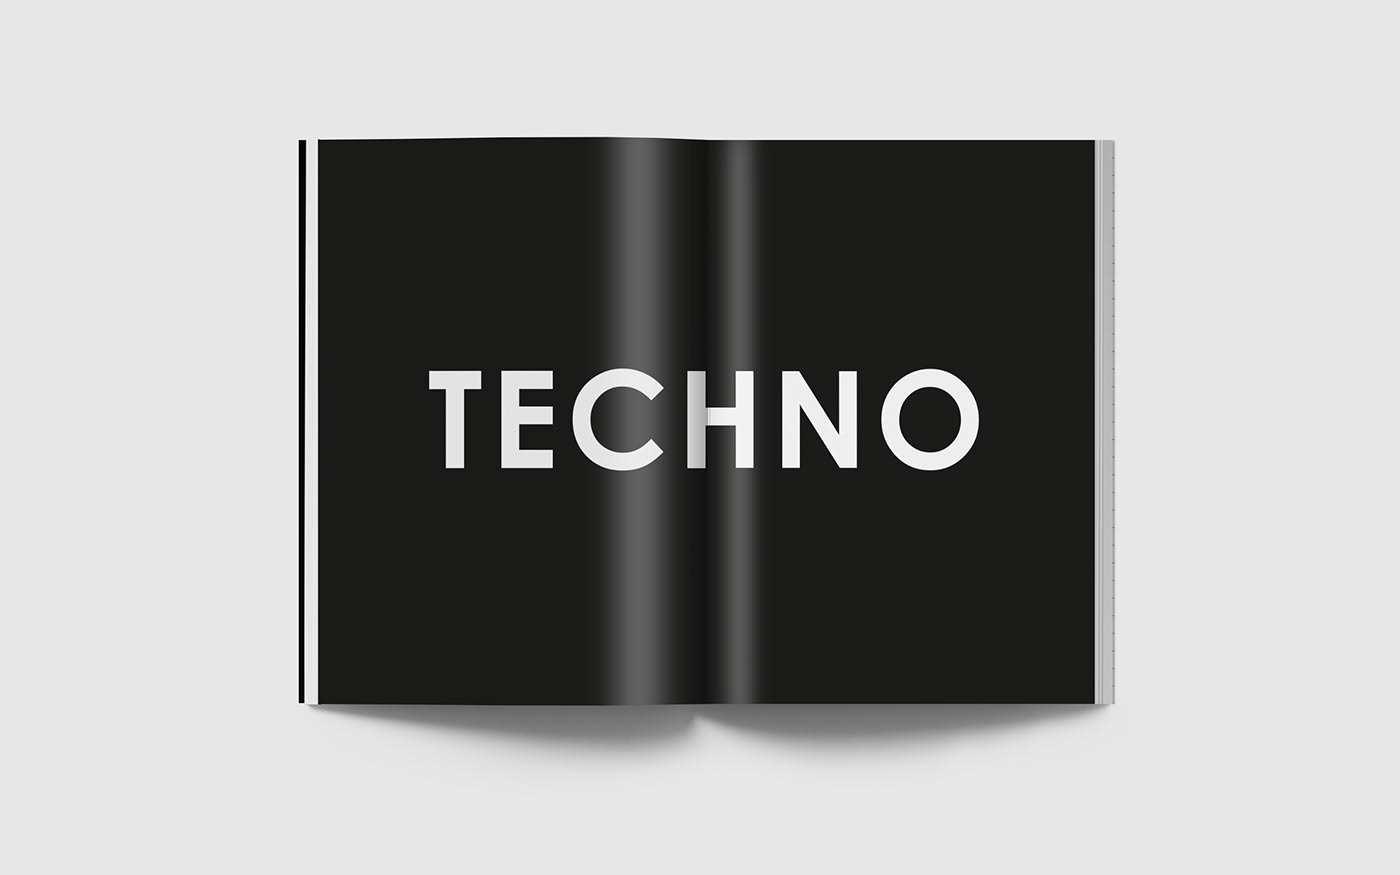 dj electronica fadu Hernan Cattaneo InDesign Magazine design tipografia venancio contreras